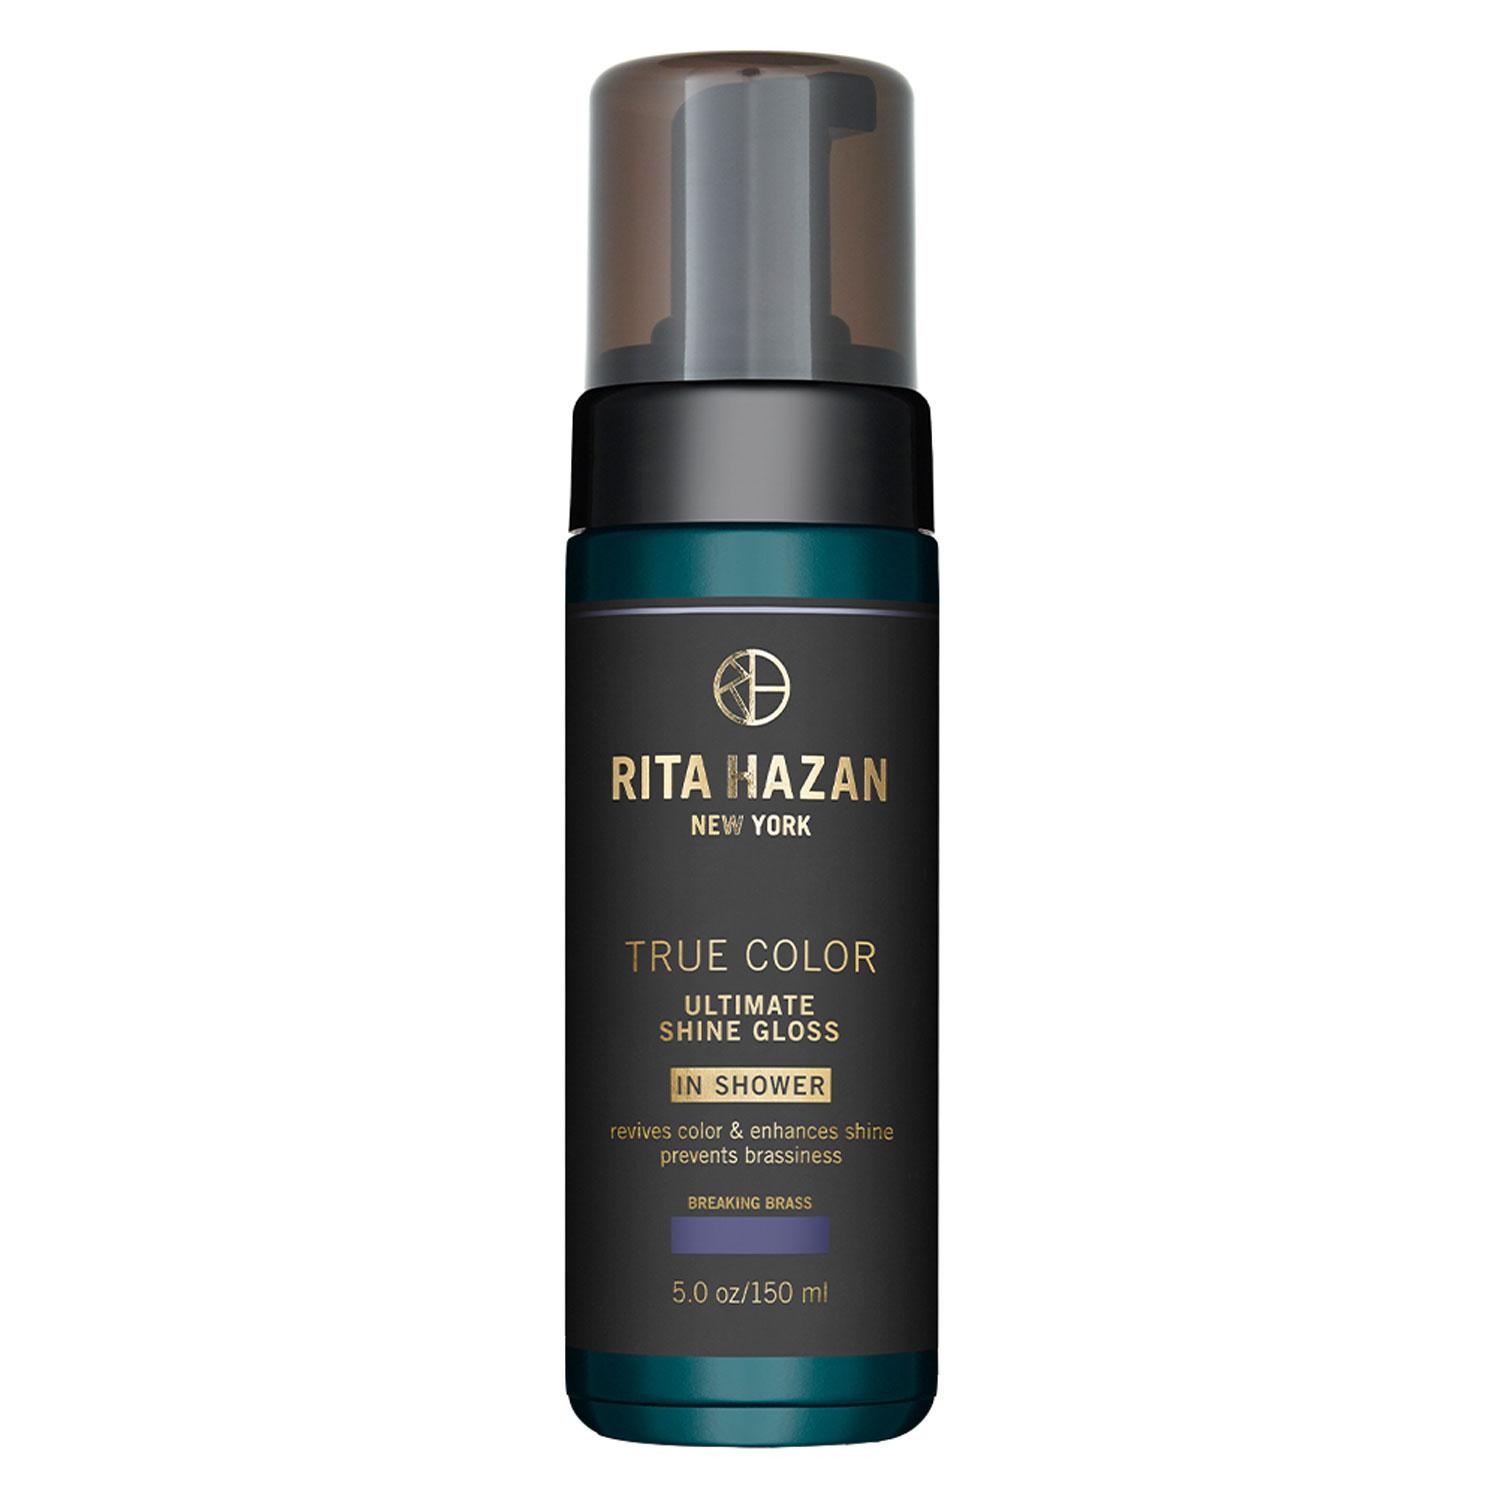 Rita Hazan New York - True Color Ultimate Shine Gloss Braking Brass